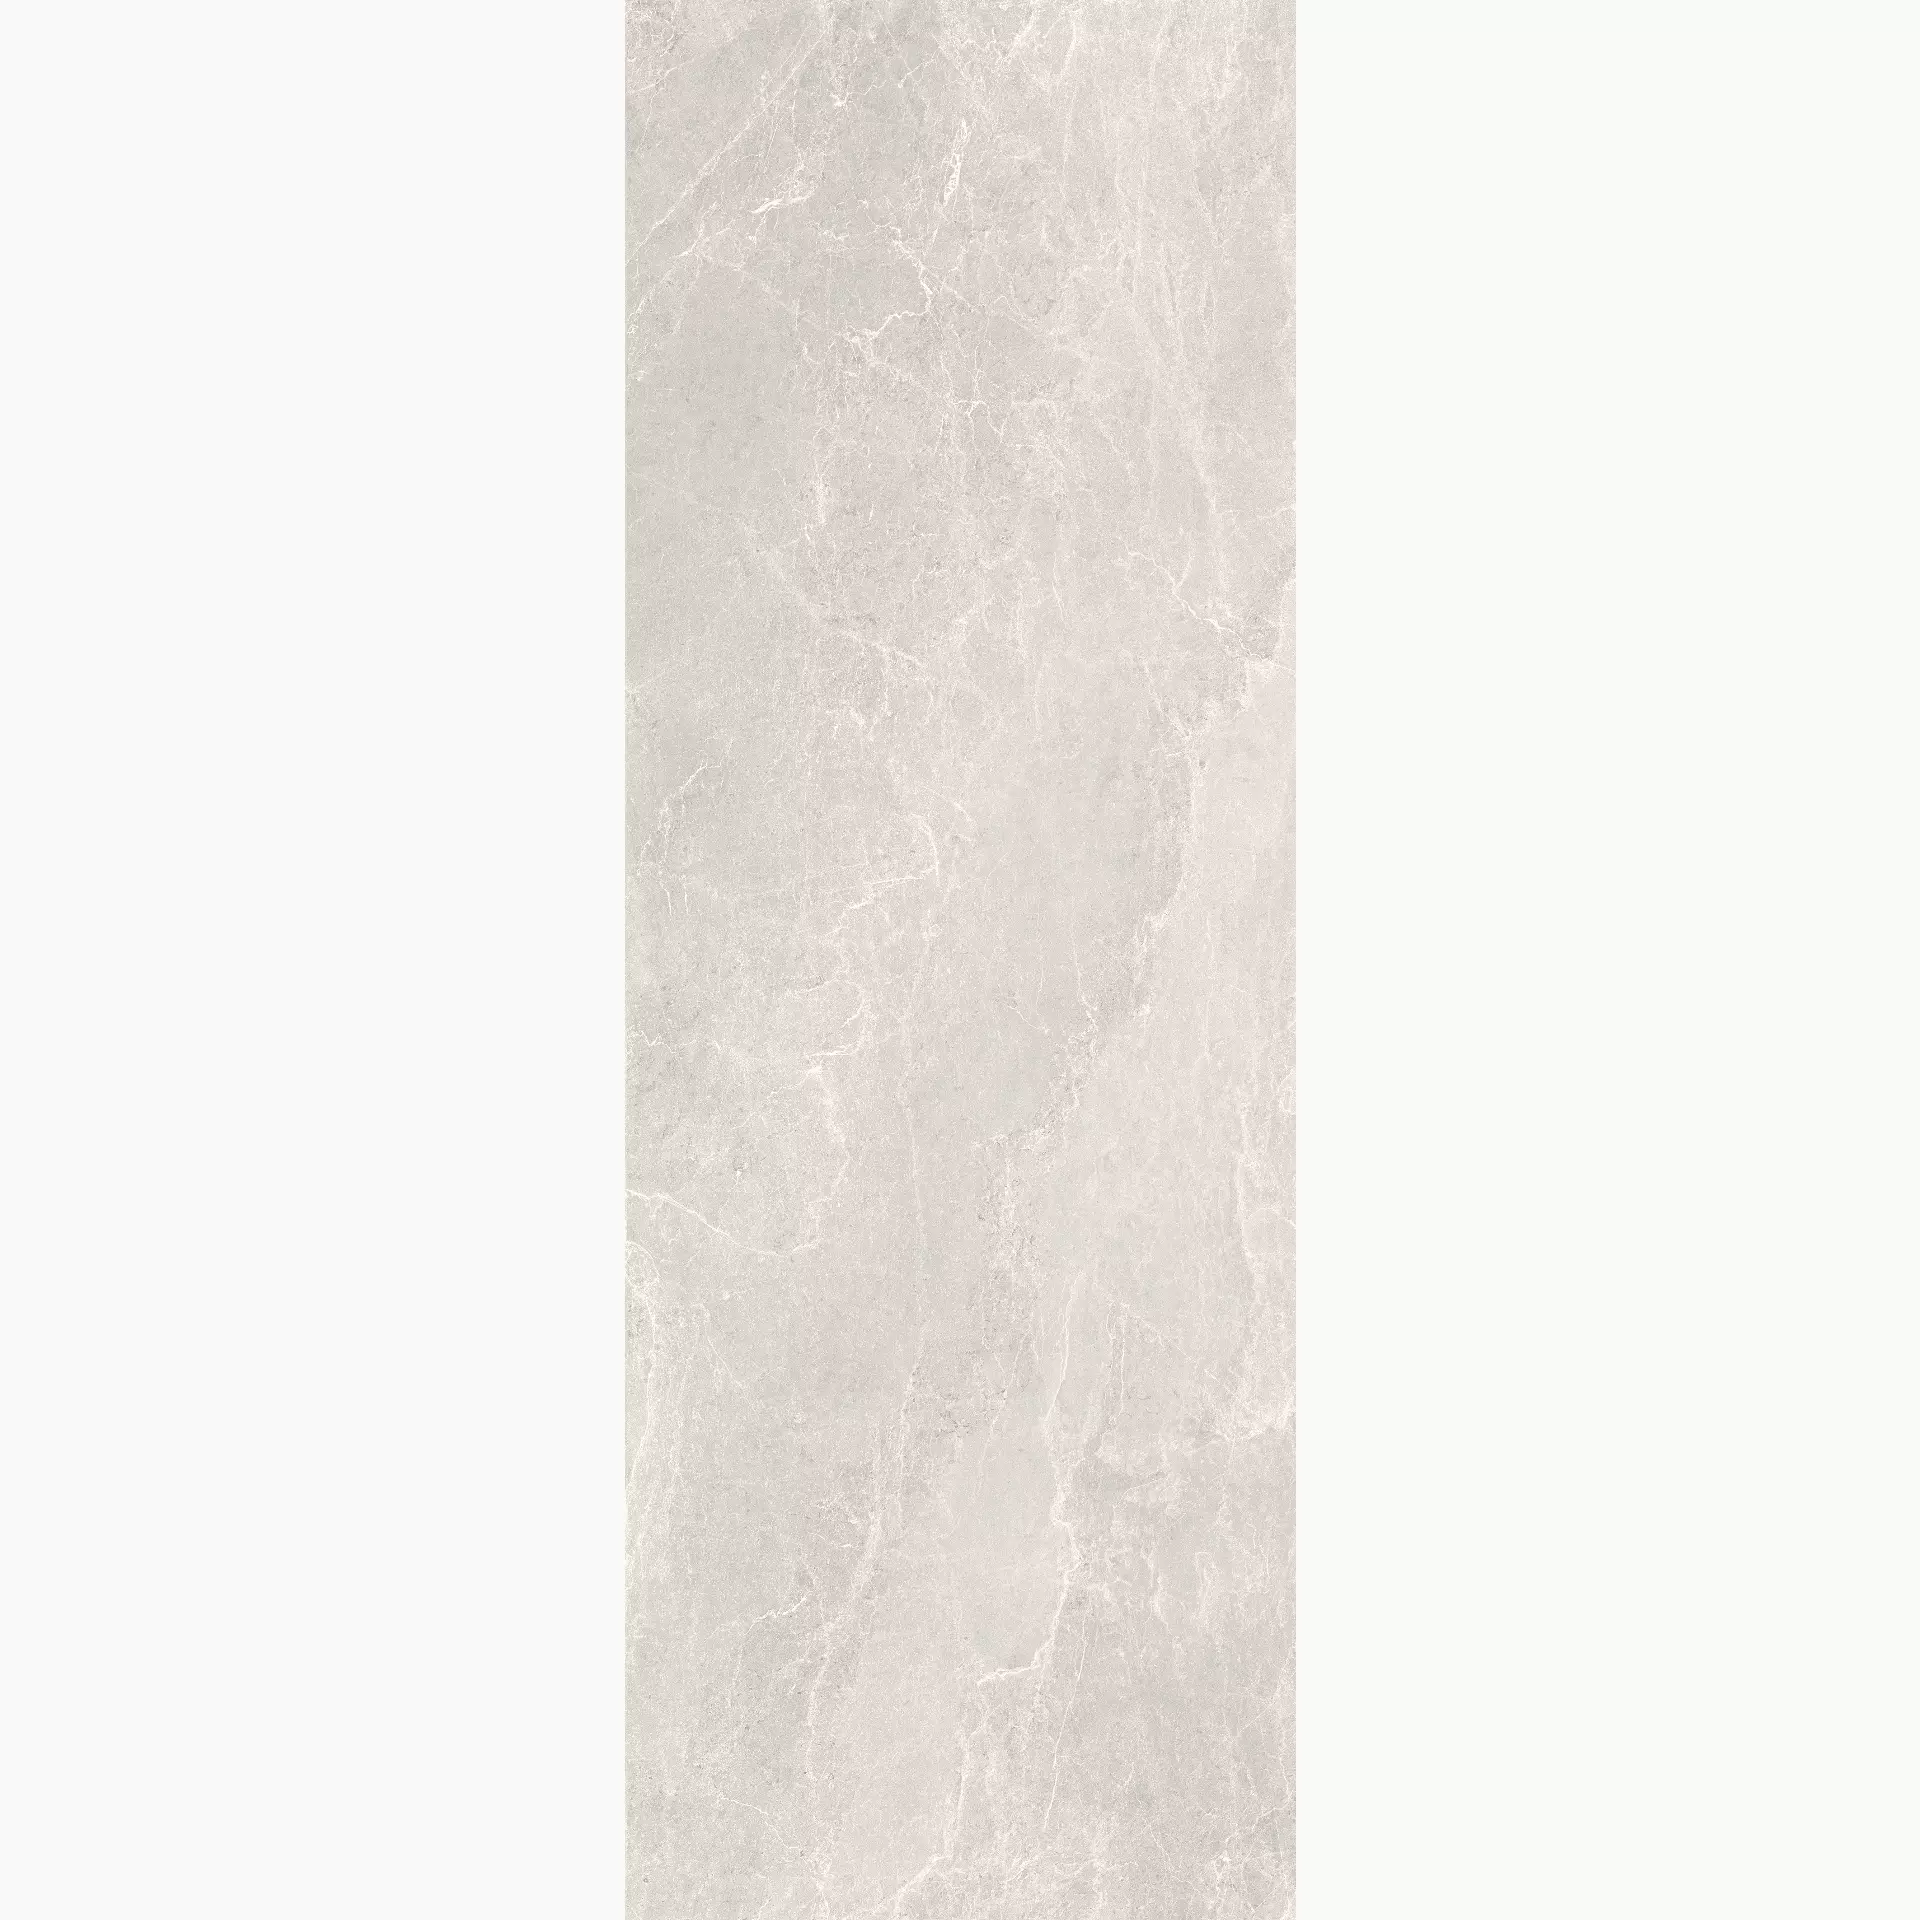 Cottodeste Krl Advantage Skin Chalk Naturale Protect EK7AD00 100x300cm rectified 3,5mm